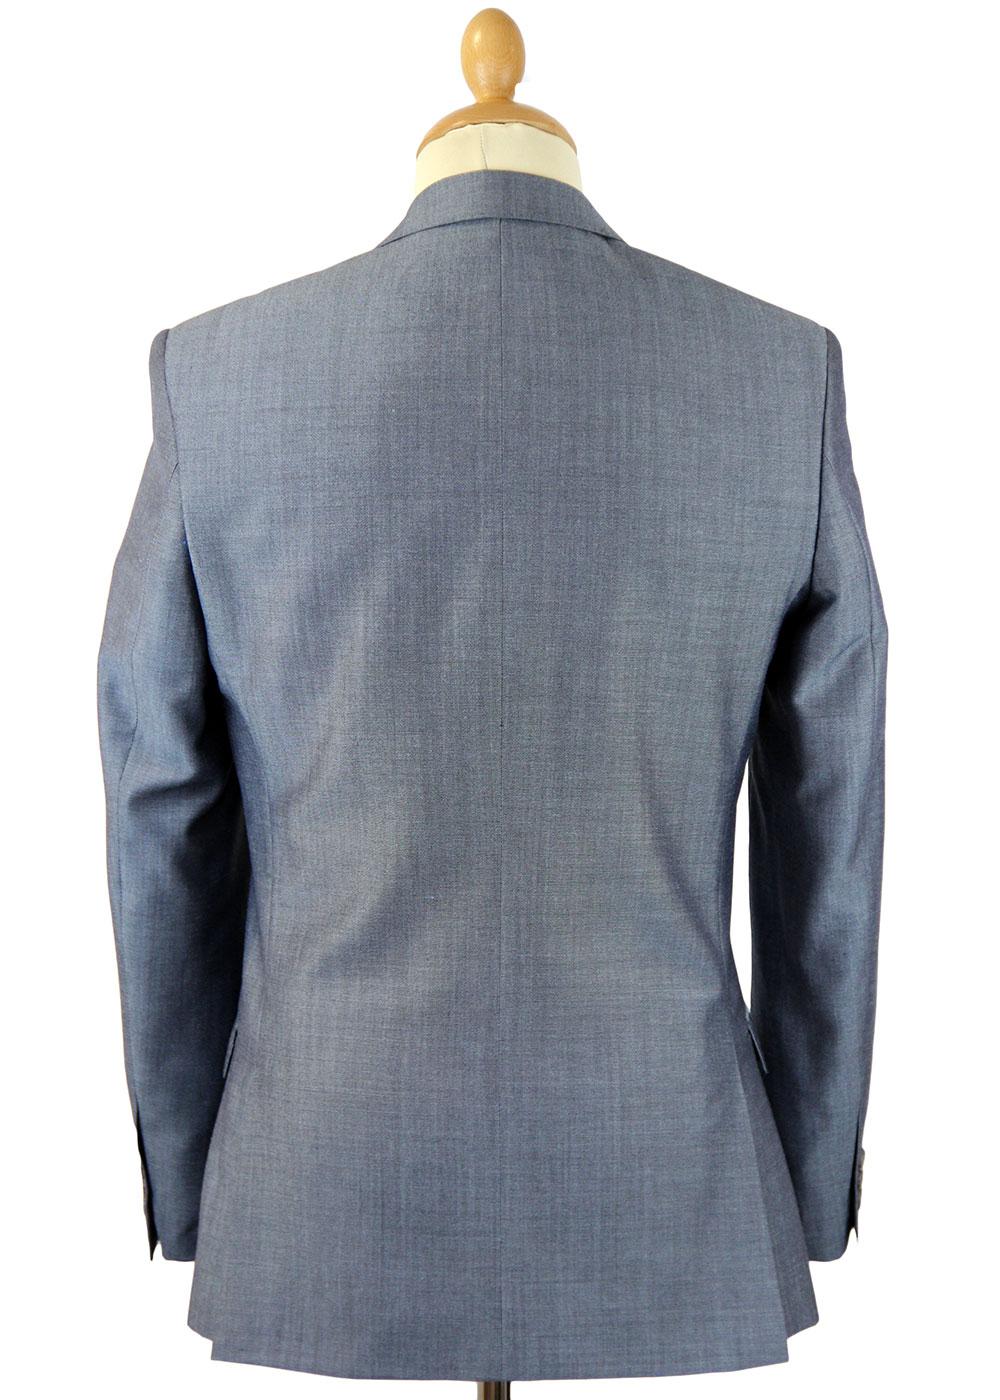 Mens Retro 60s style slim fit Mod Mohair Suit in Blue.